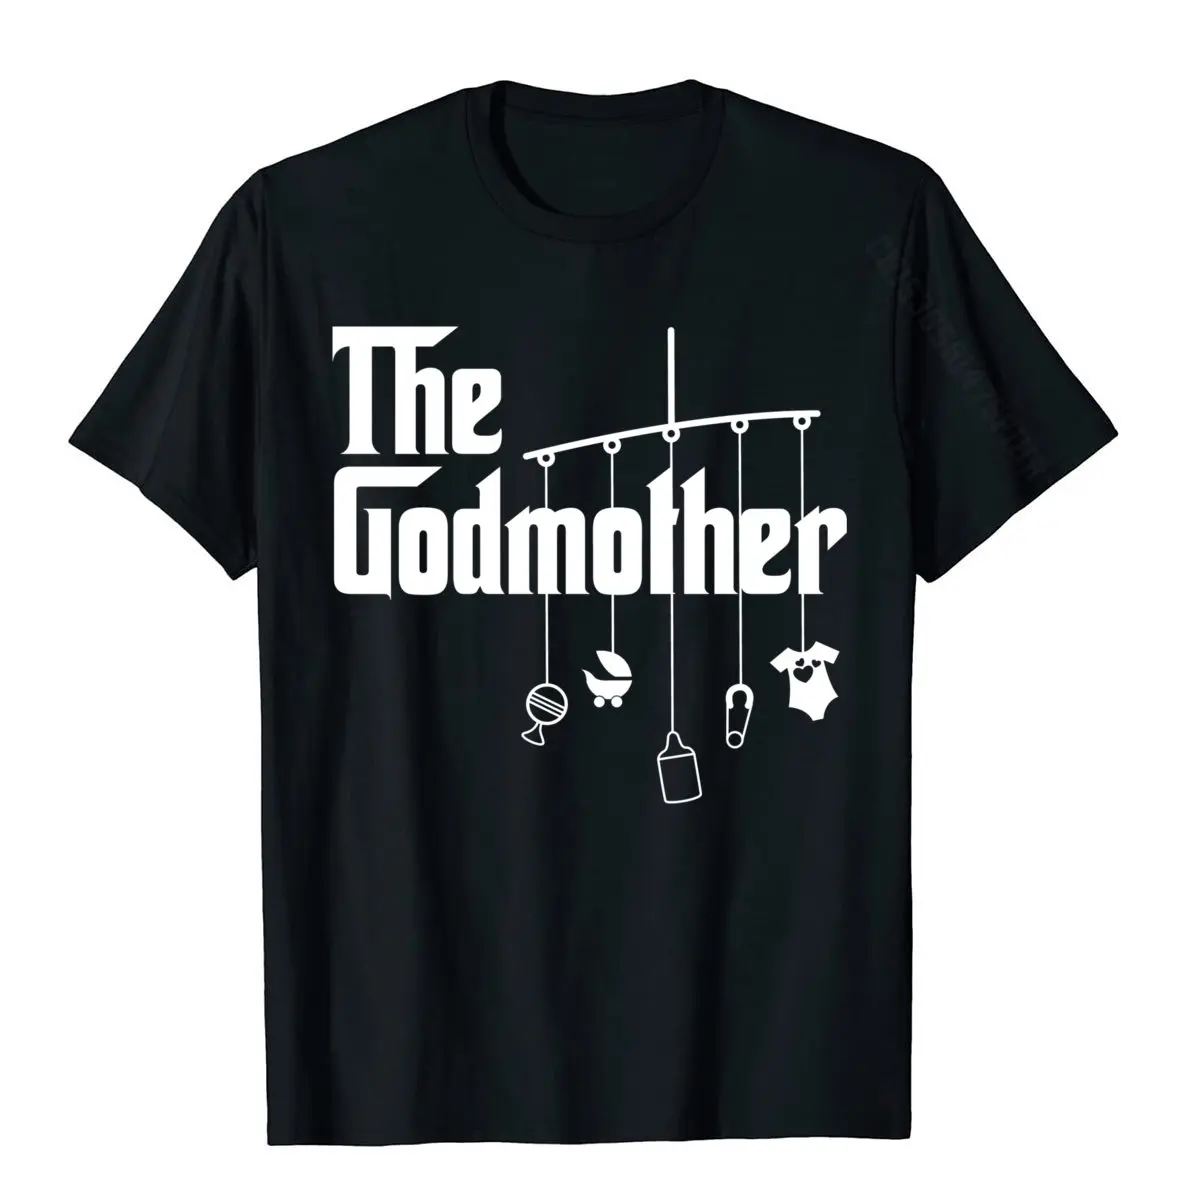 The Godmother Of New Baby Funny Pun Gift T-Shirt T Shirt Faddish Printed Cotton Men's T Shirt Design